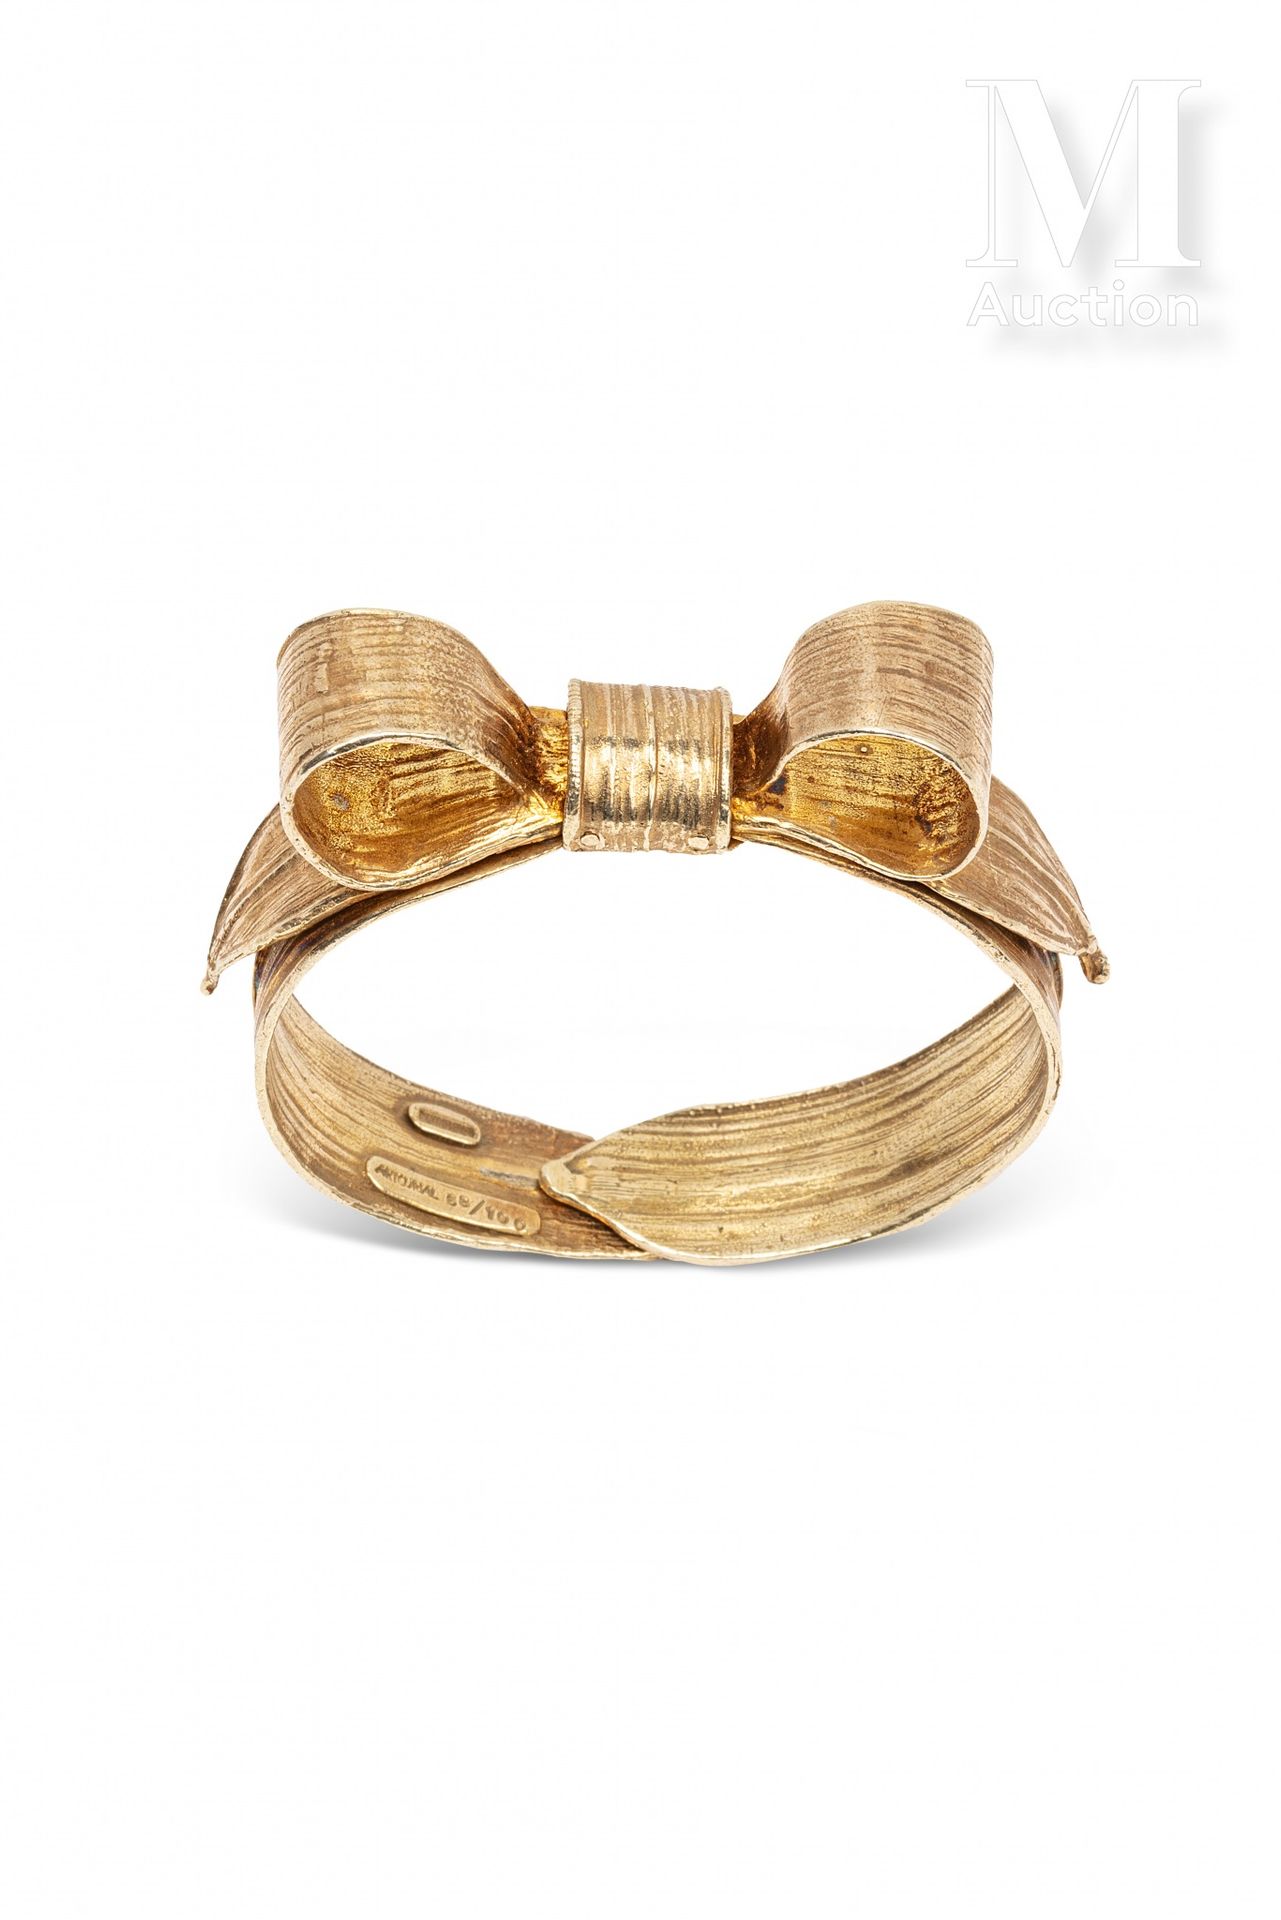 Claude LALANNE (1925 - 2019) "Knot"

1991

Rigid bracelet in silver vermeil.

Ed&hellip;